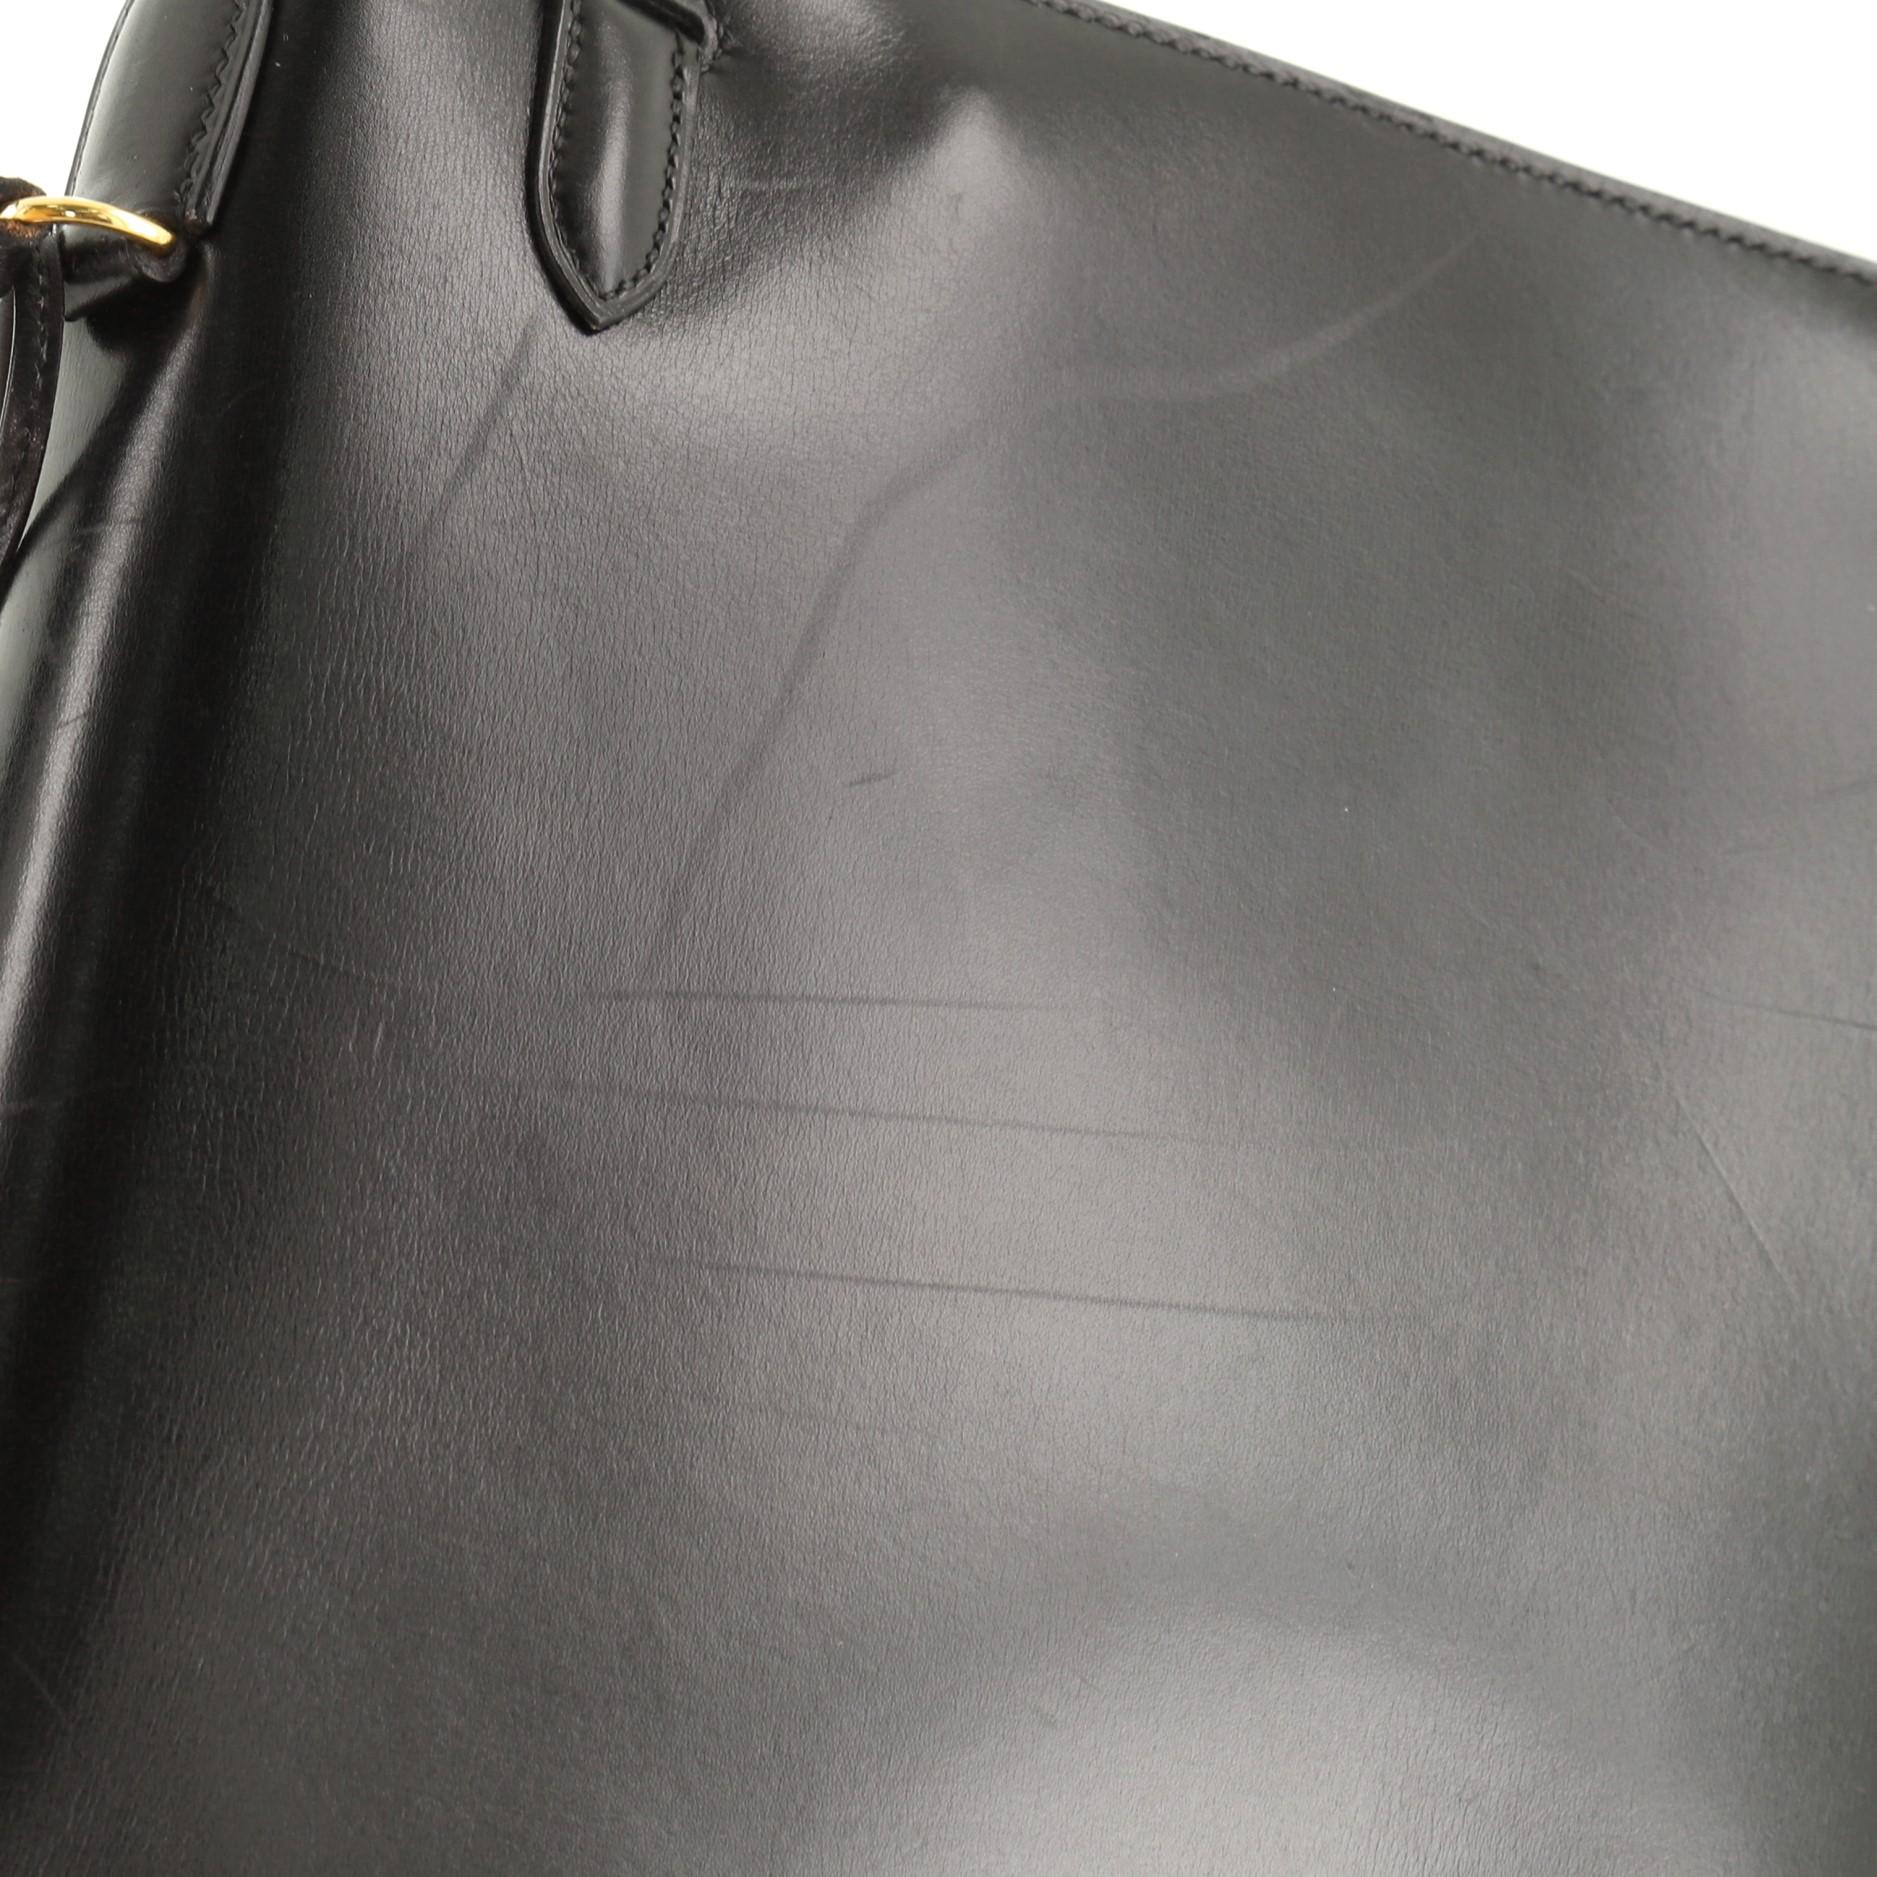 Kelly Handbag Noir Box Calf with Gold Hardware 32 4